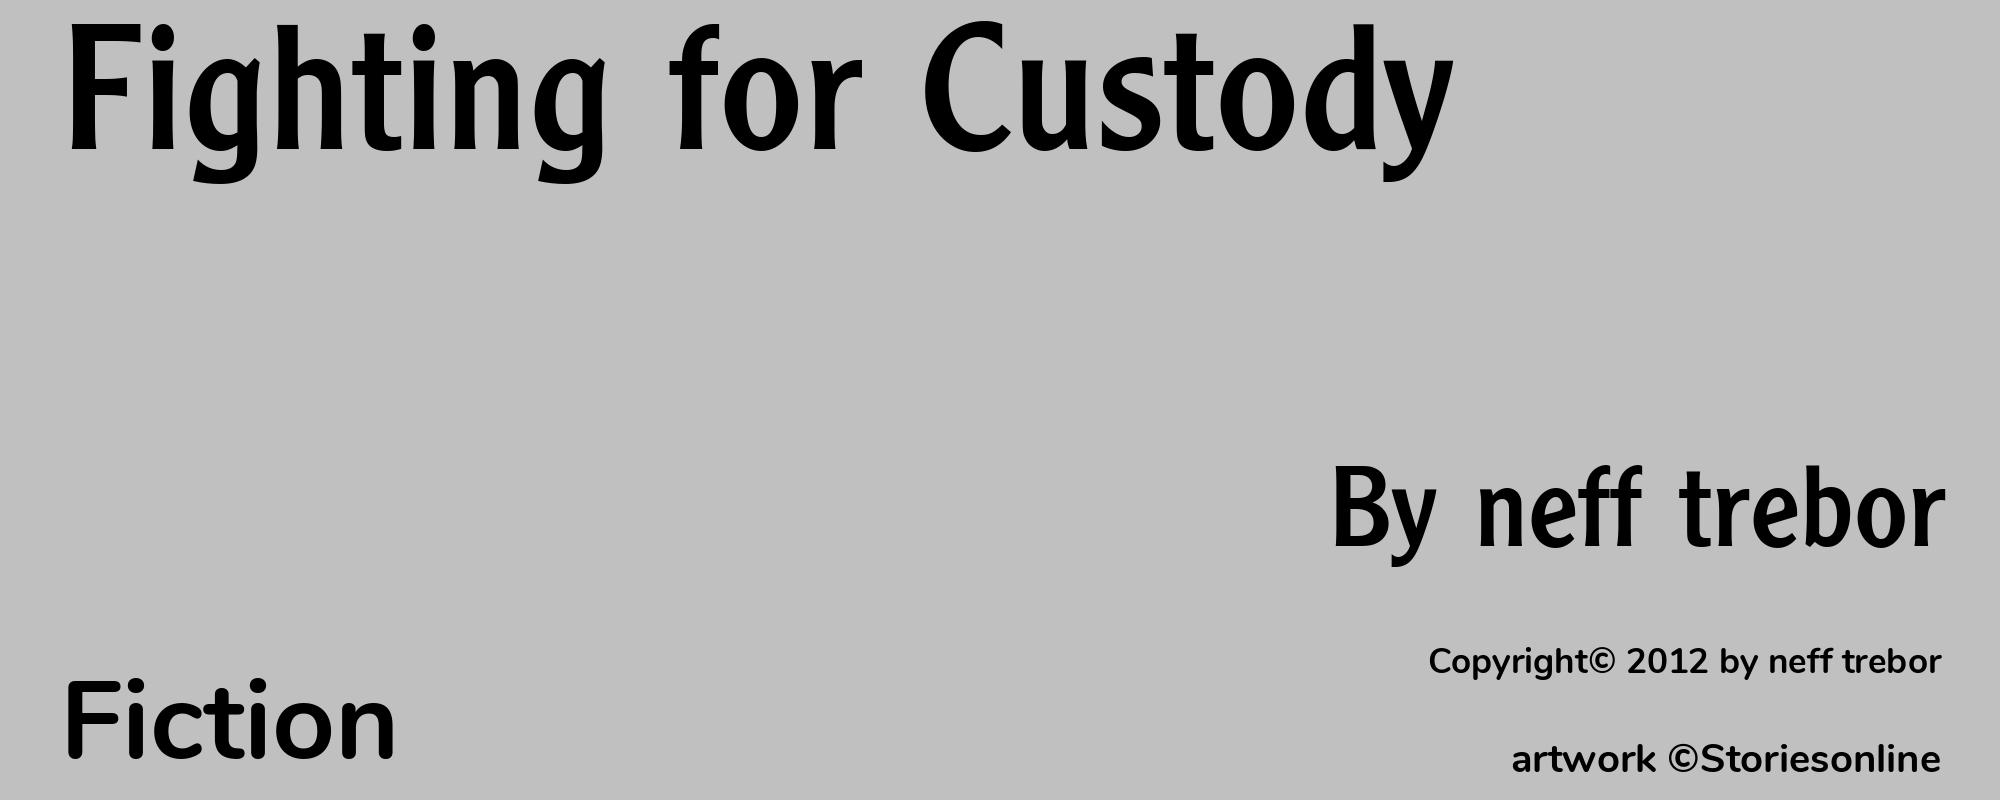 Fighting for Custody - Cover